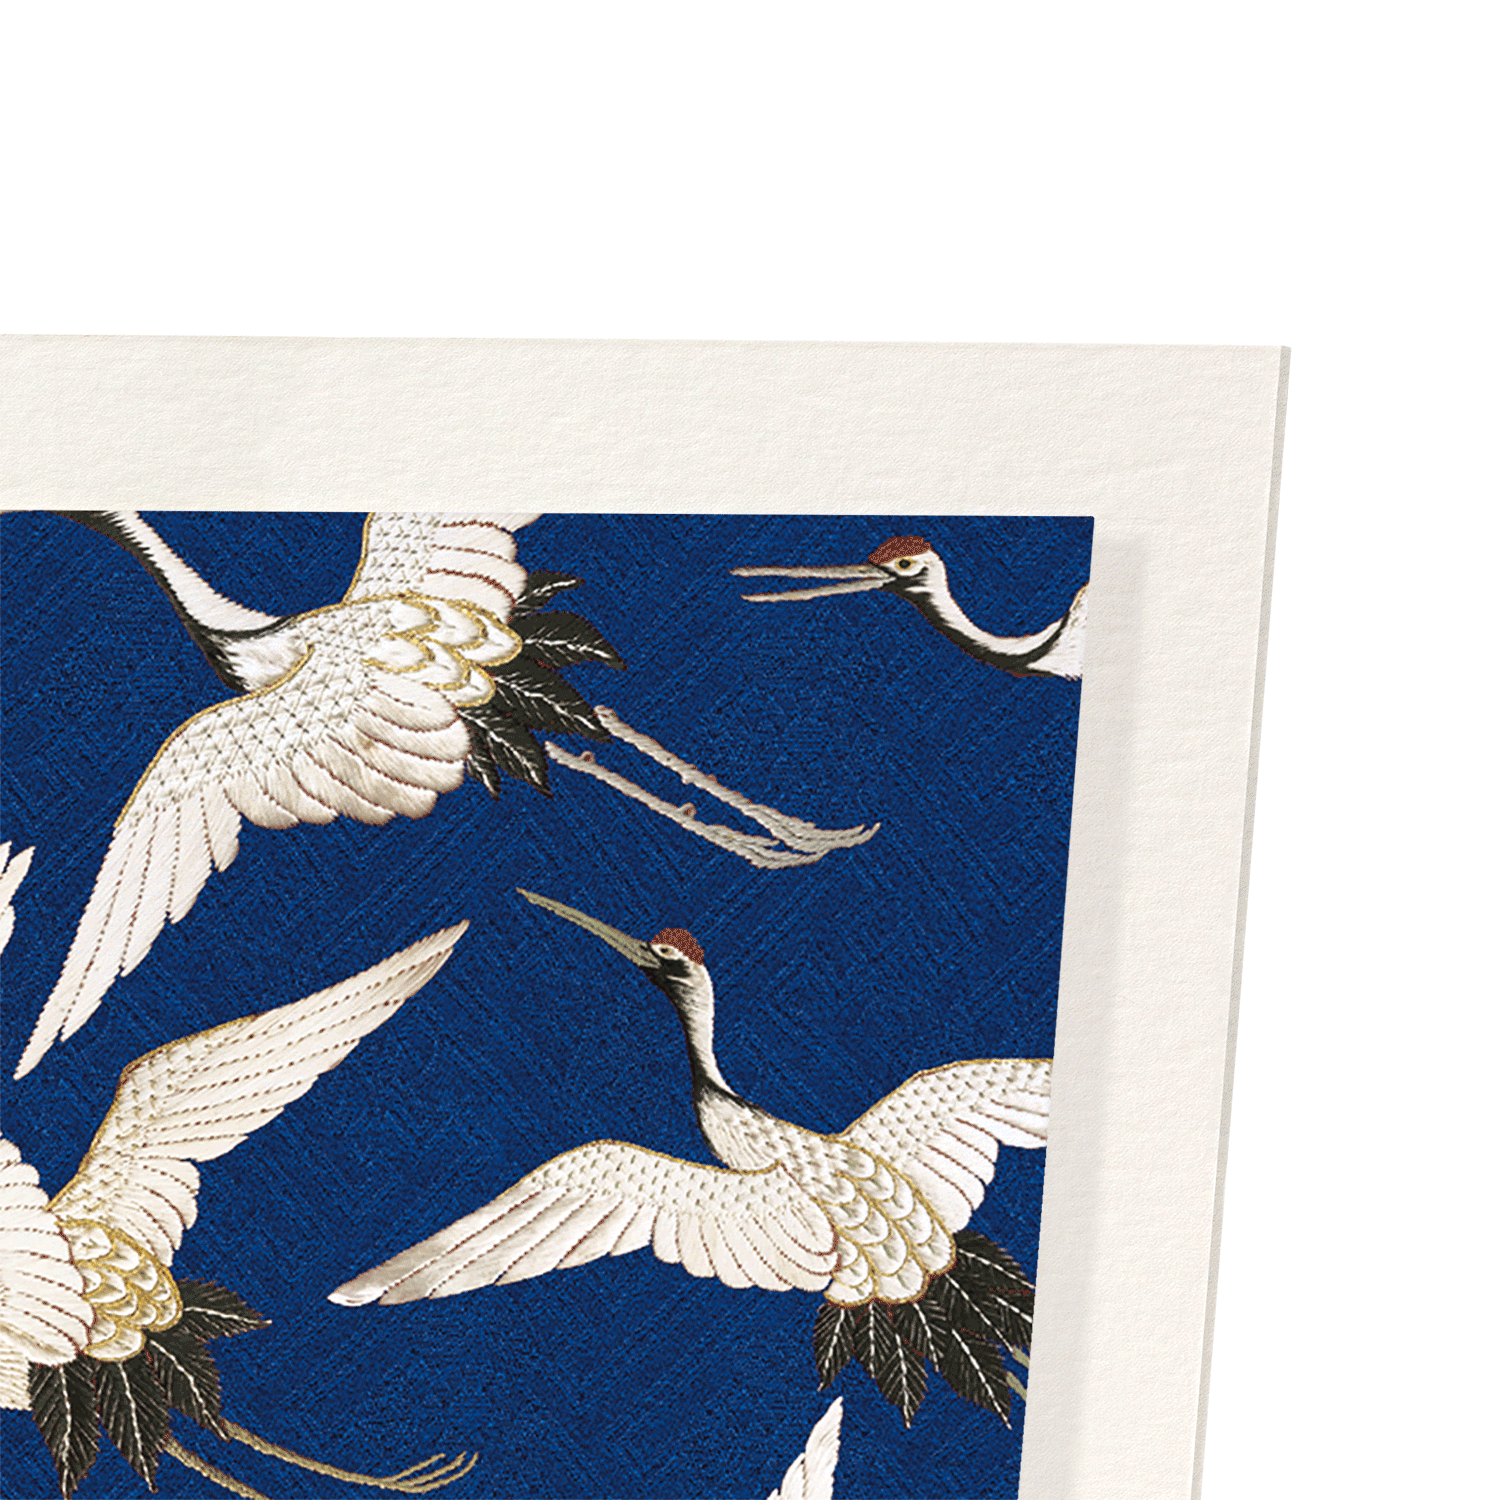 CRANE EMBROIDERY ON BLUE : Pattern Art Print